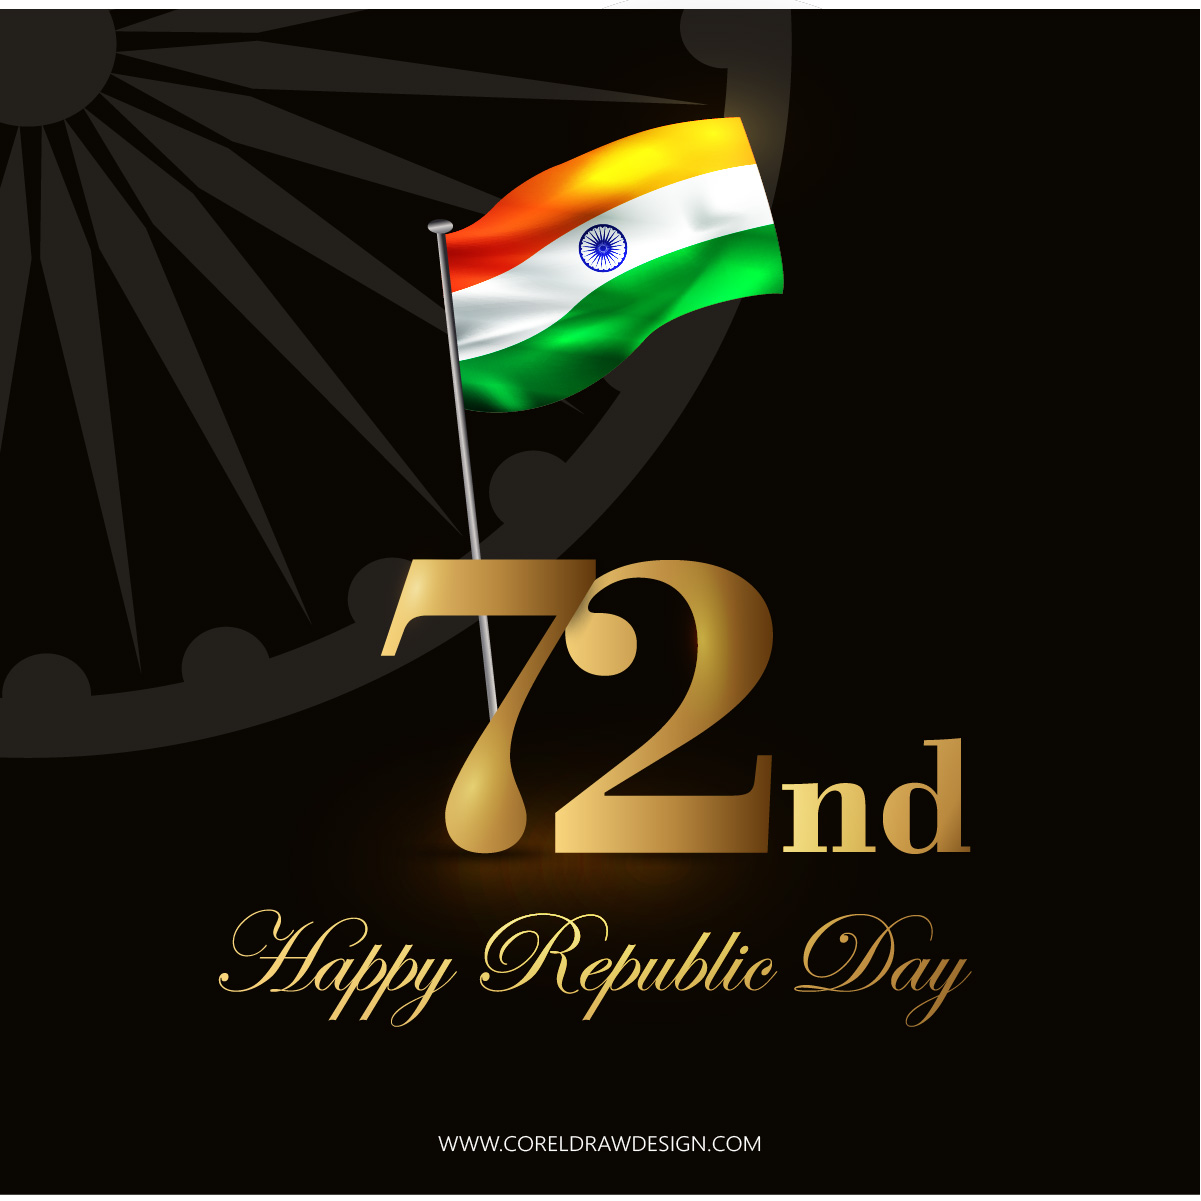 Happy 72nd Republic Day